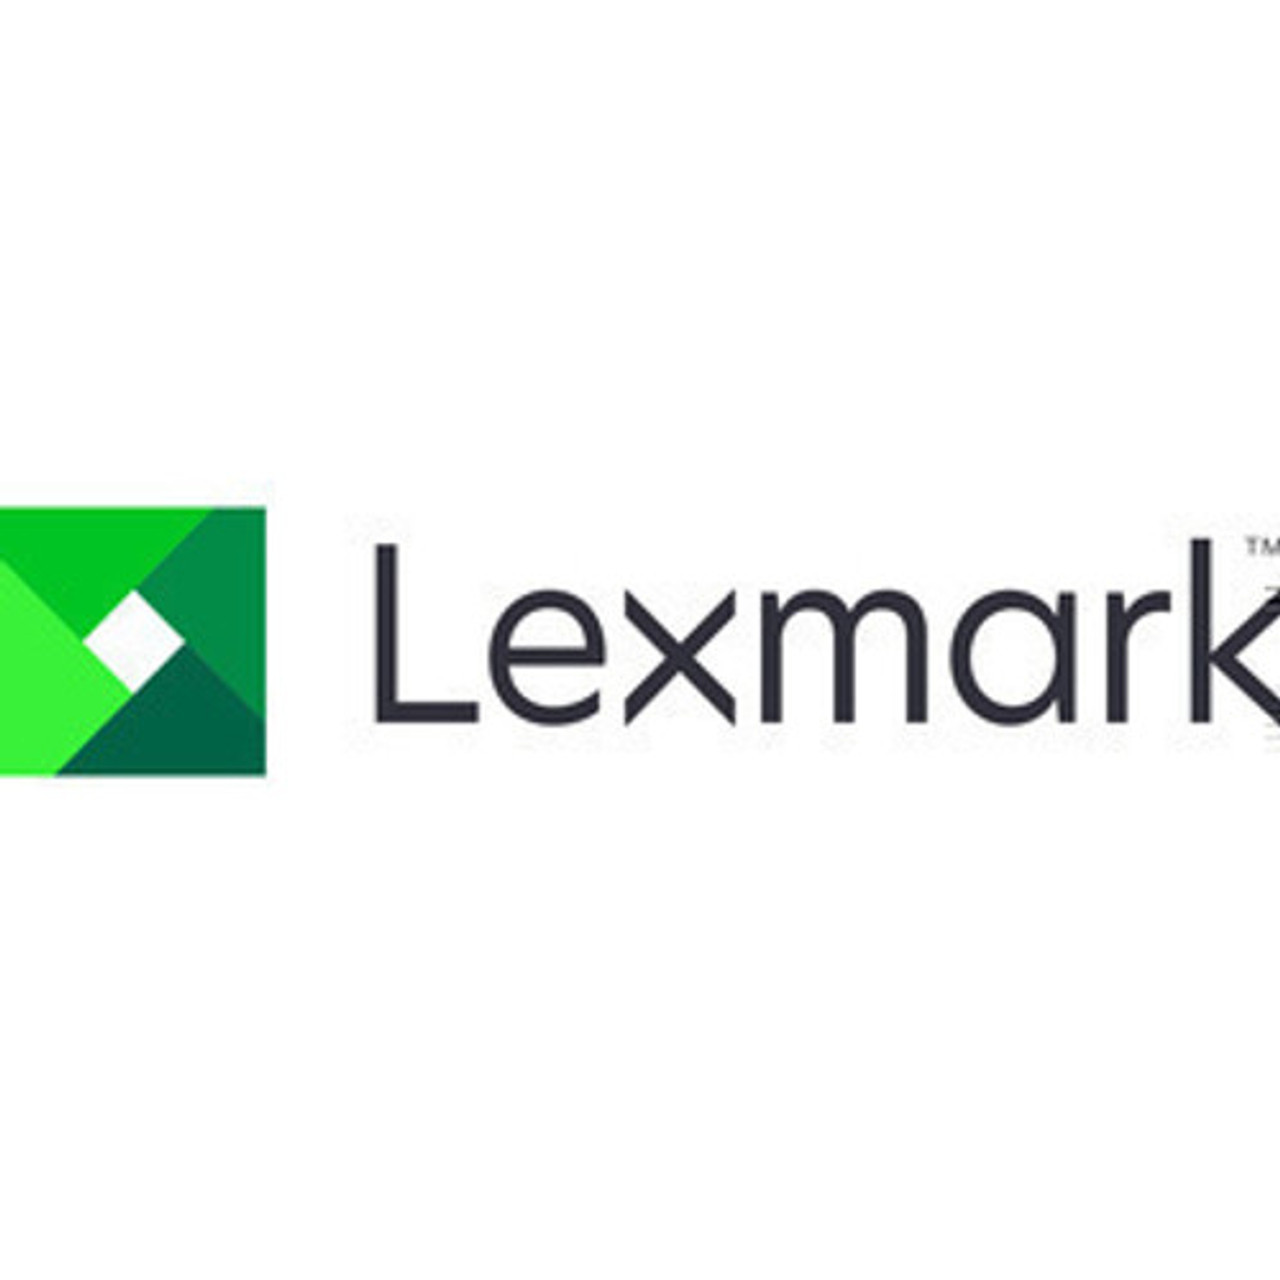 Lexmark Advanced Exchange Next Business Day - Per Call - CX431 - 2371556